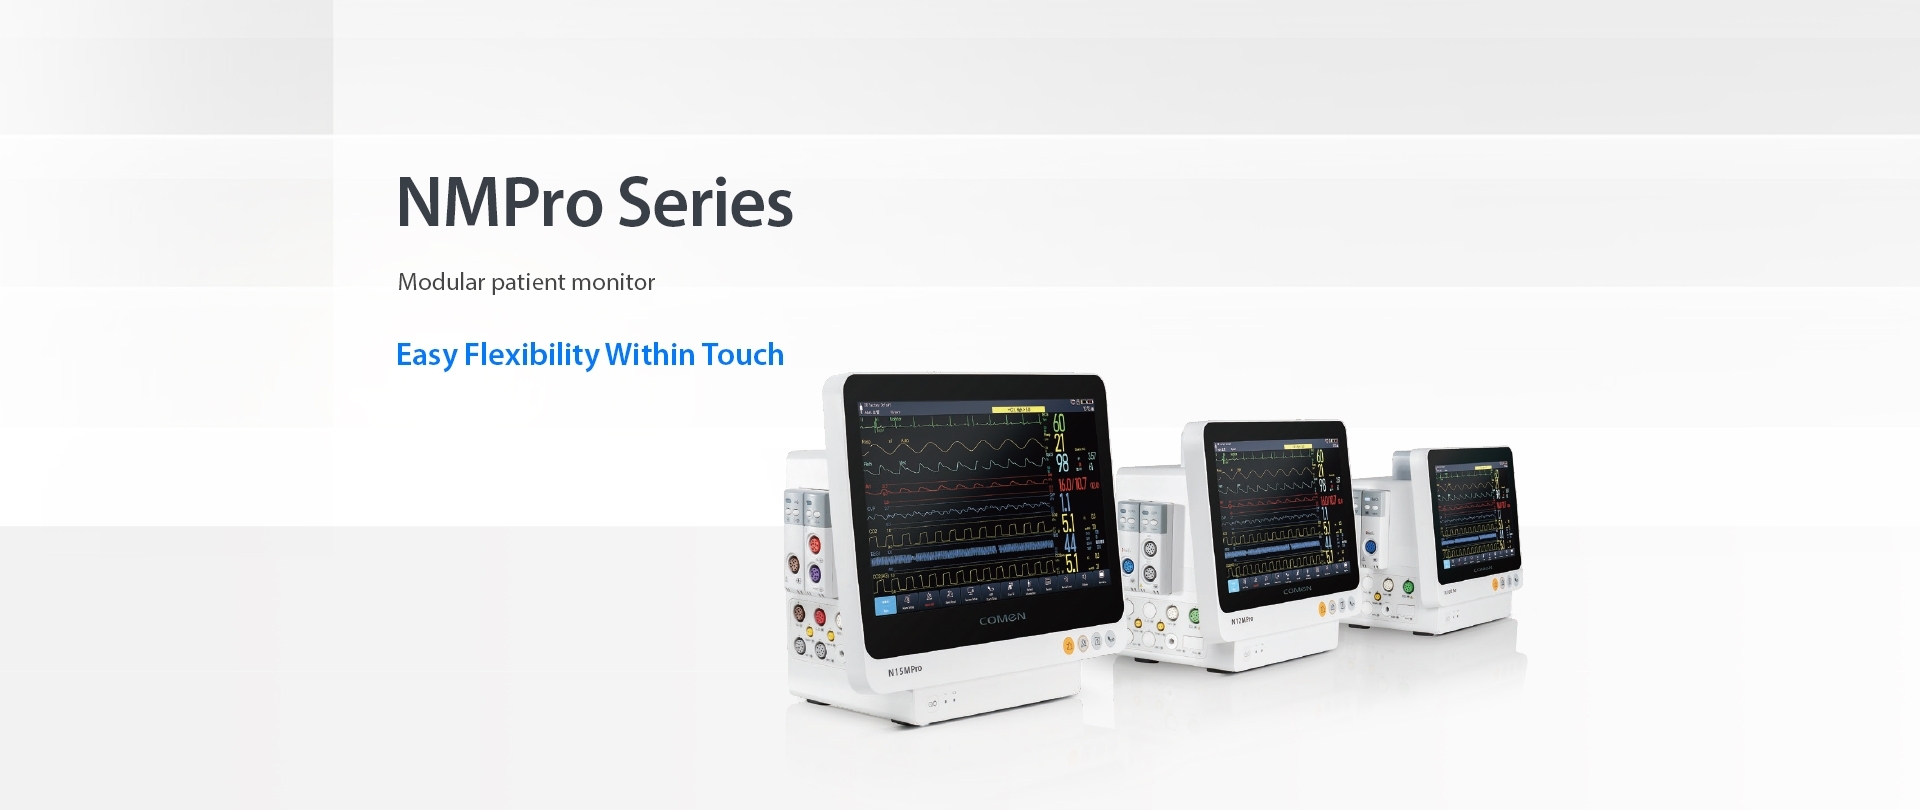 NMPro Series Modular patient monitor